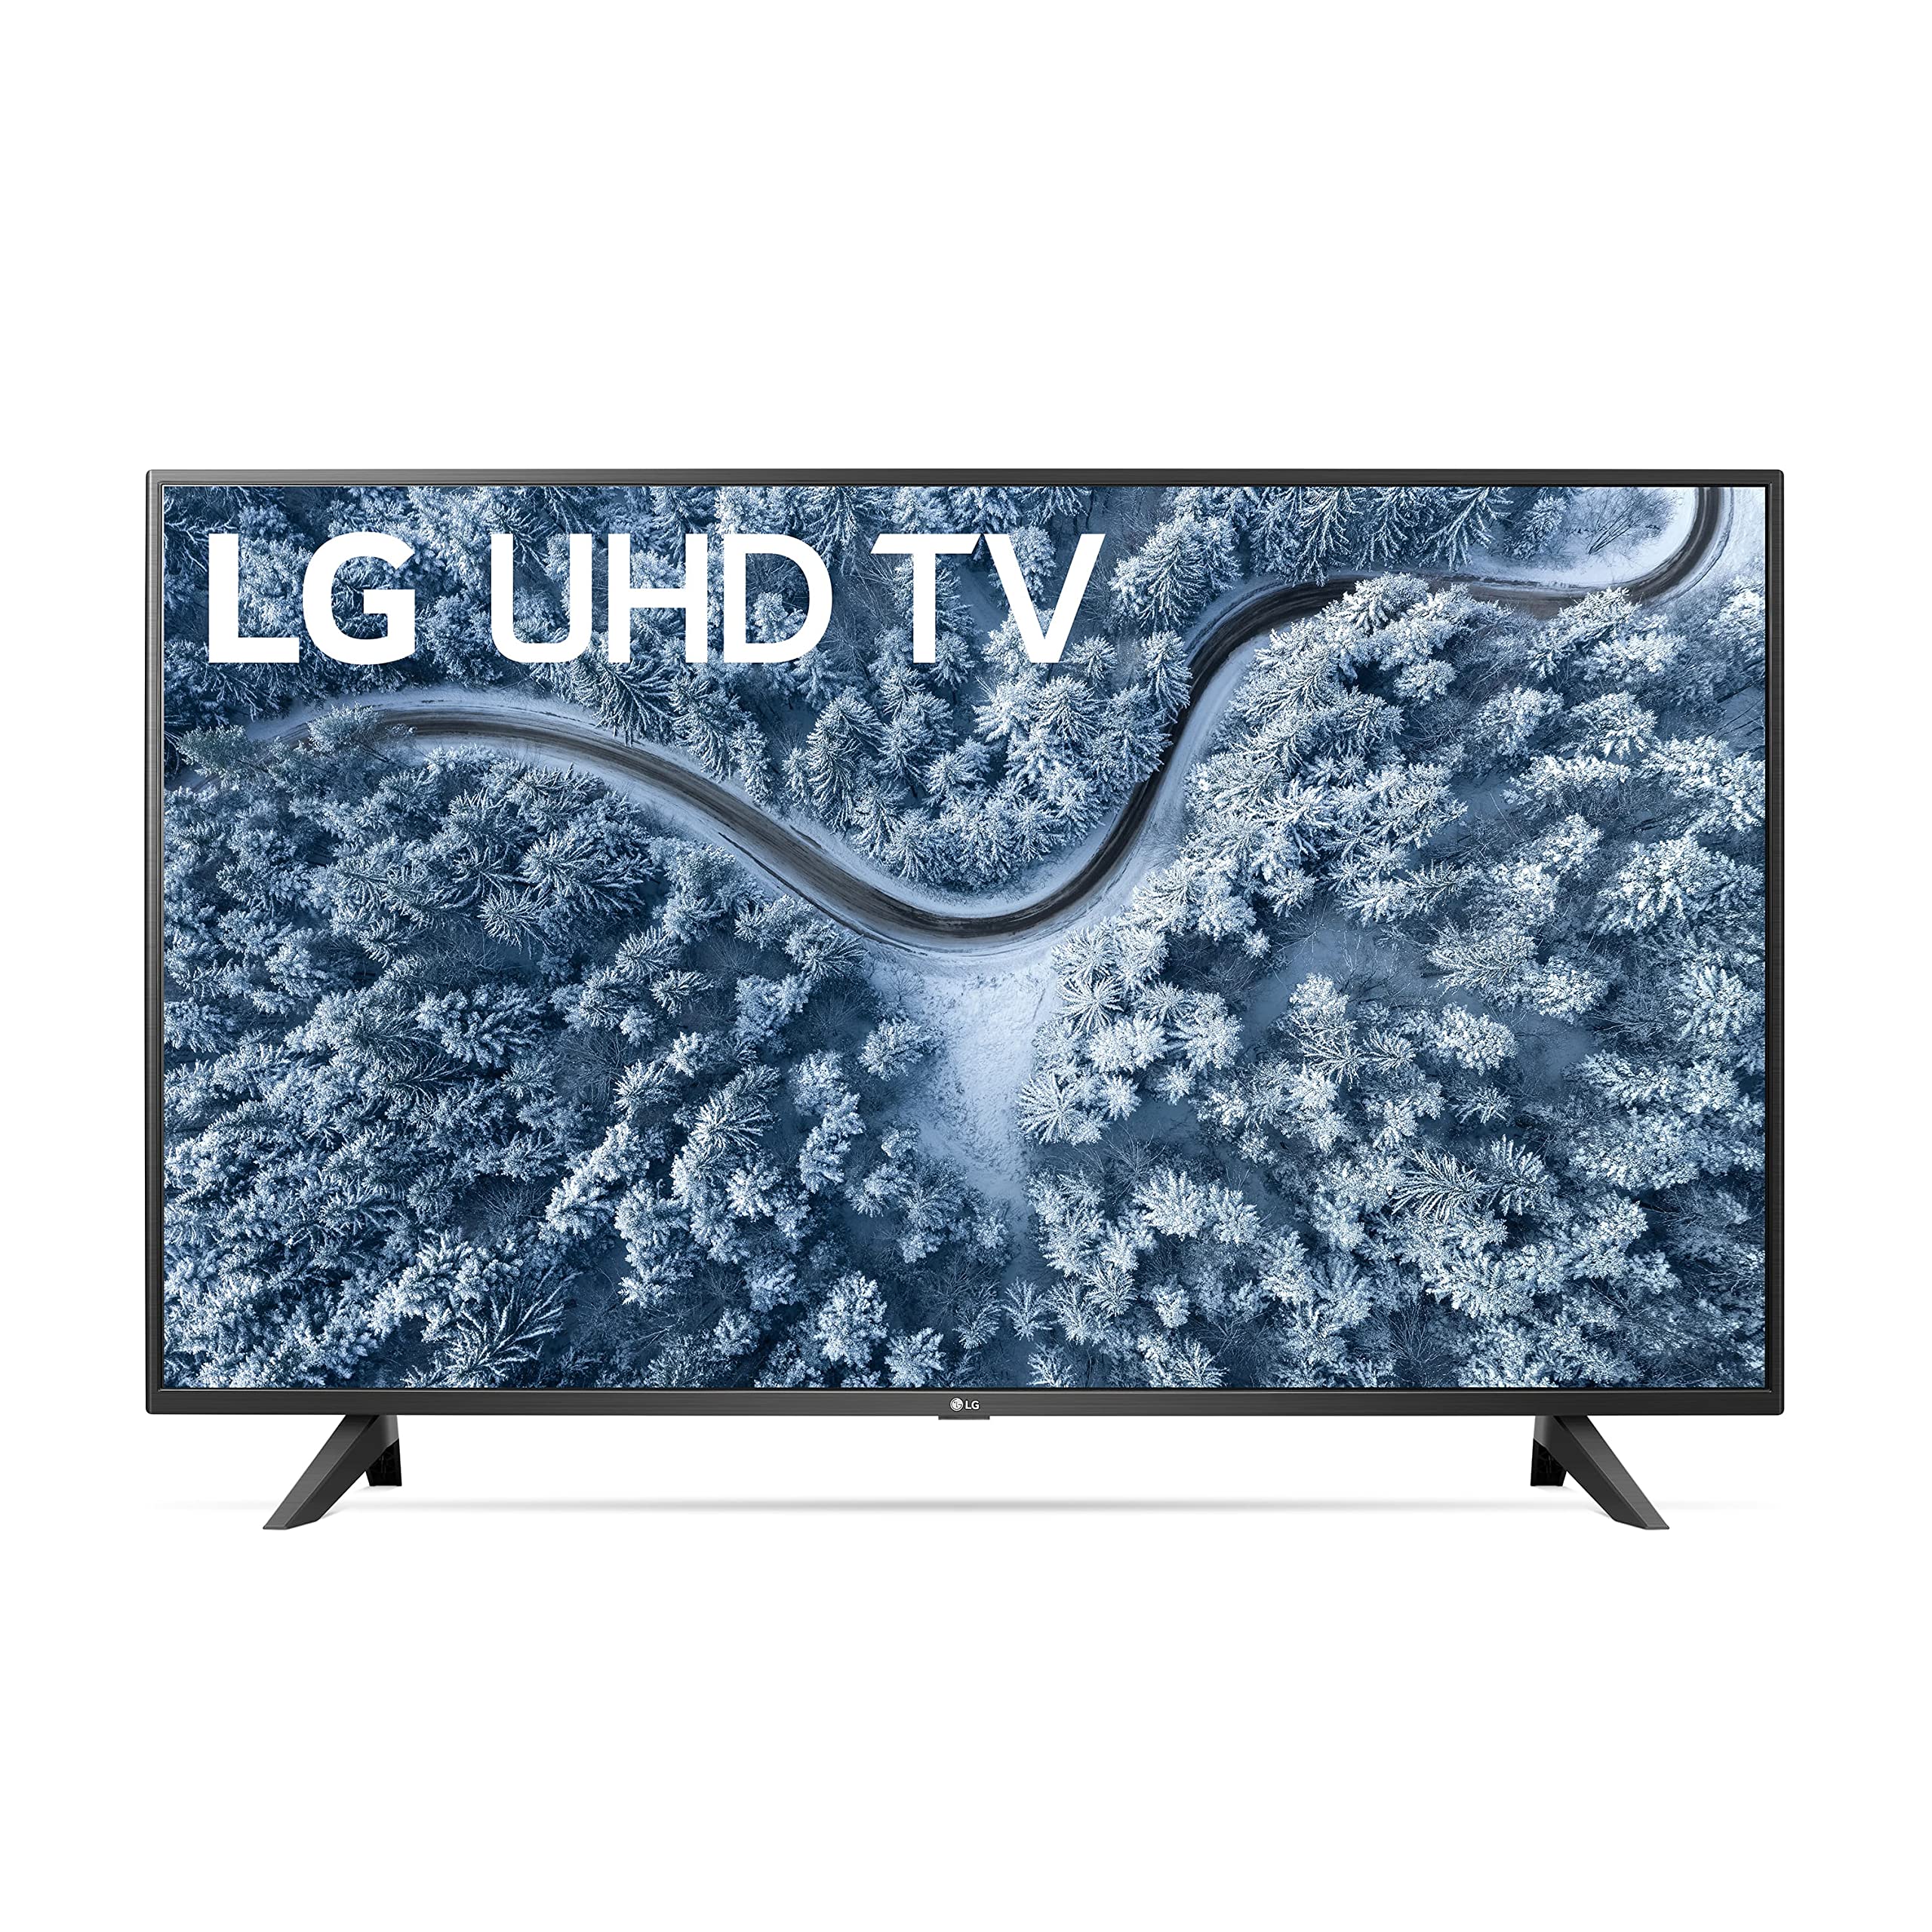 LG 50UP7000 Series 4K LED UHD Smart webOS TV 50UP7000PUA بحجم 50 بوصة